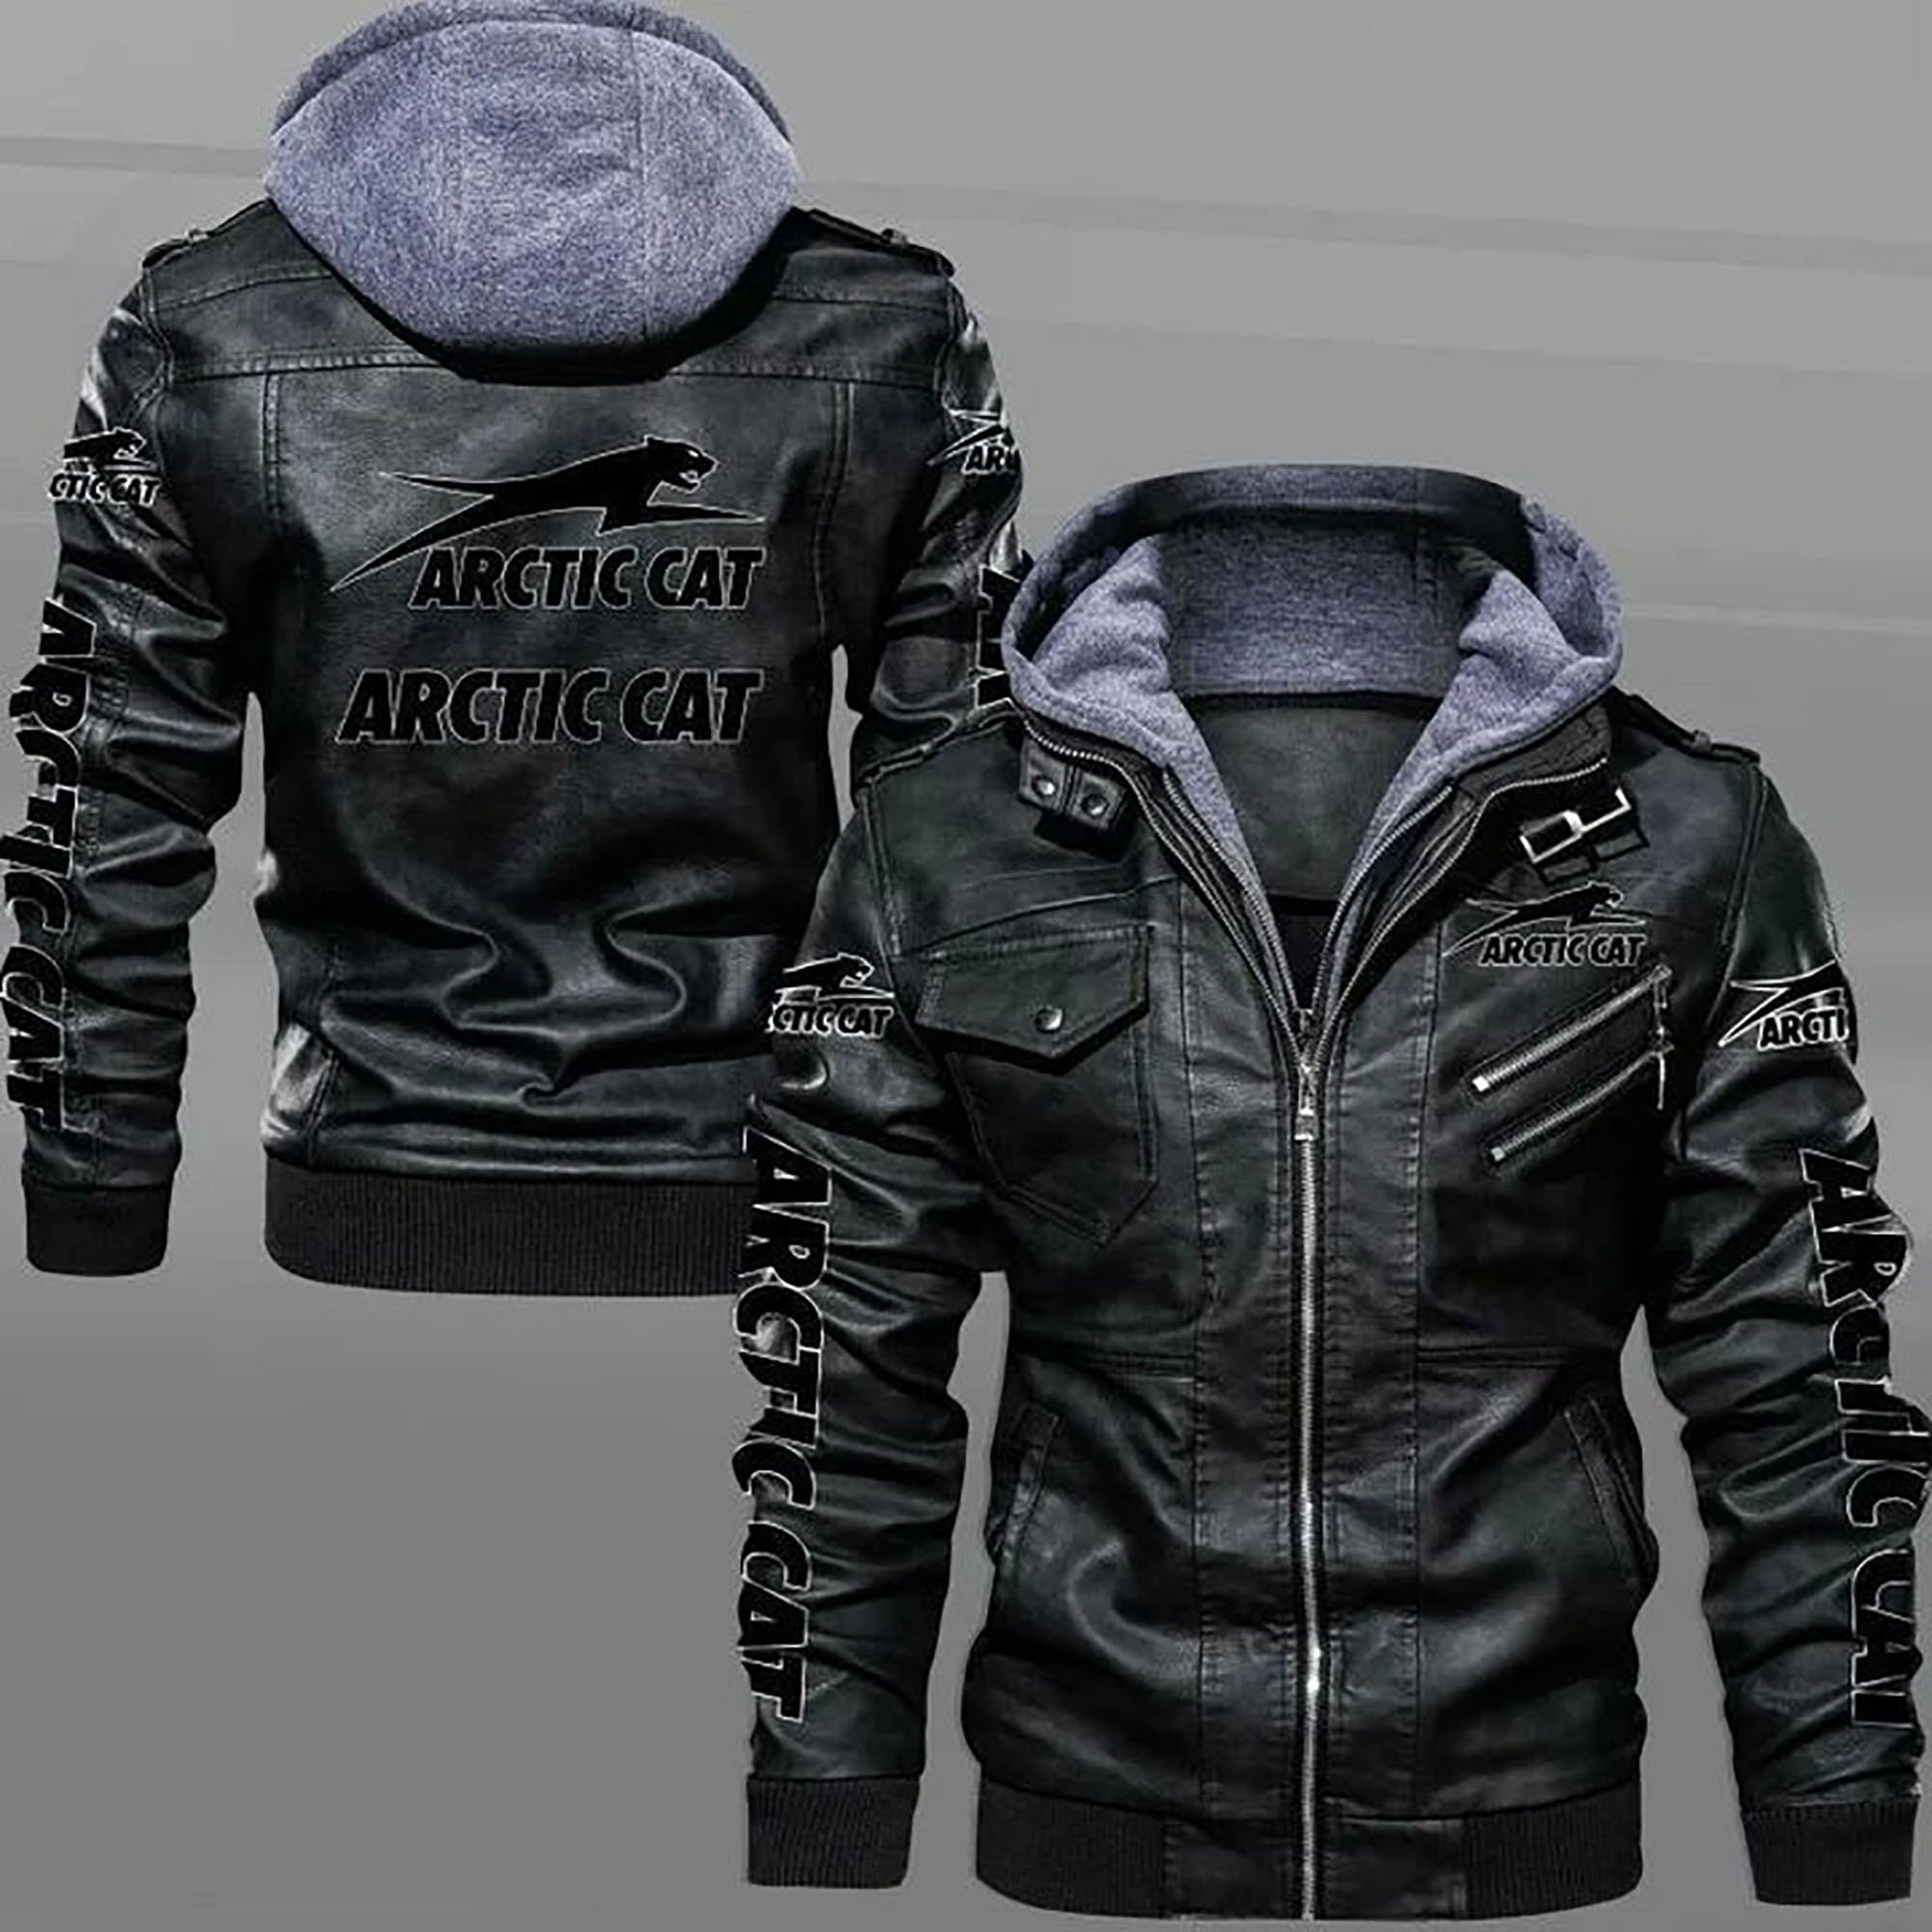 Choosing Leather Jacket that looks good on you below 218